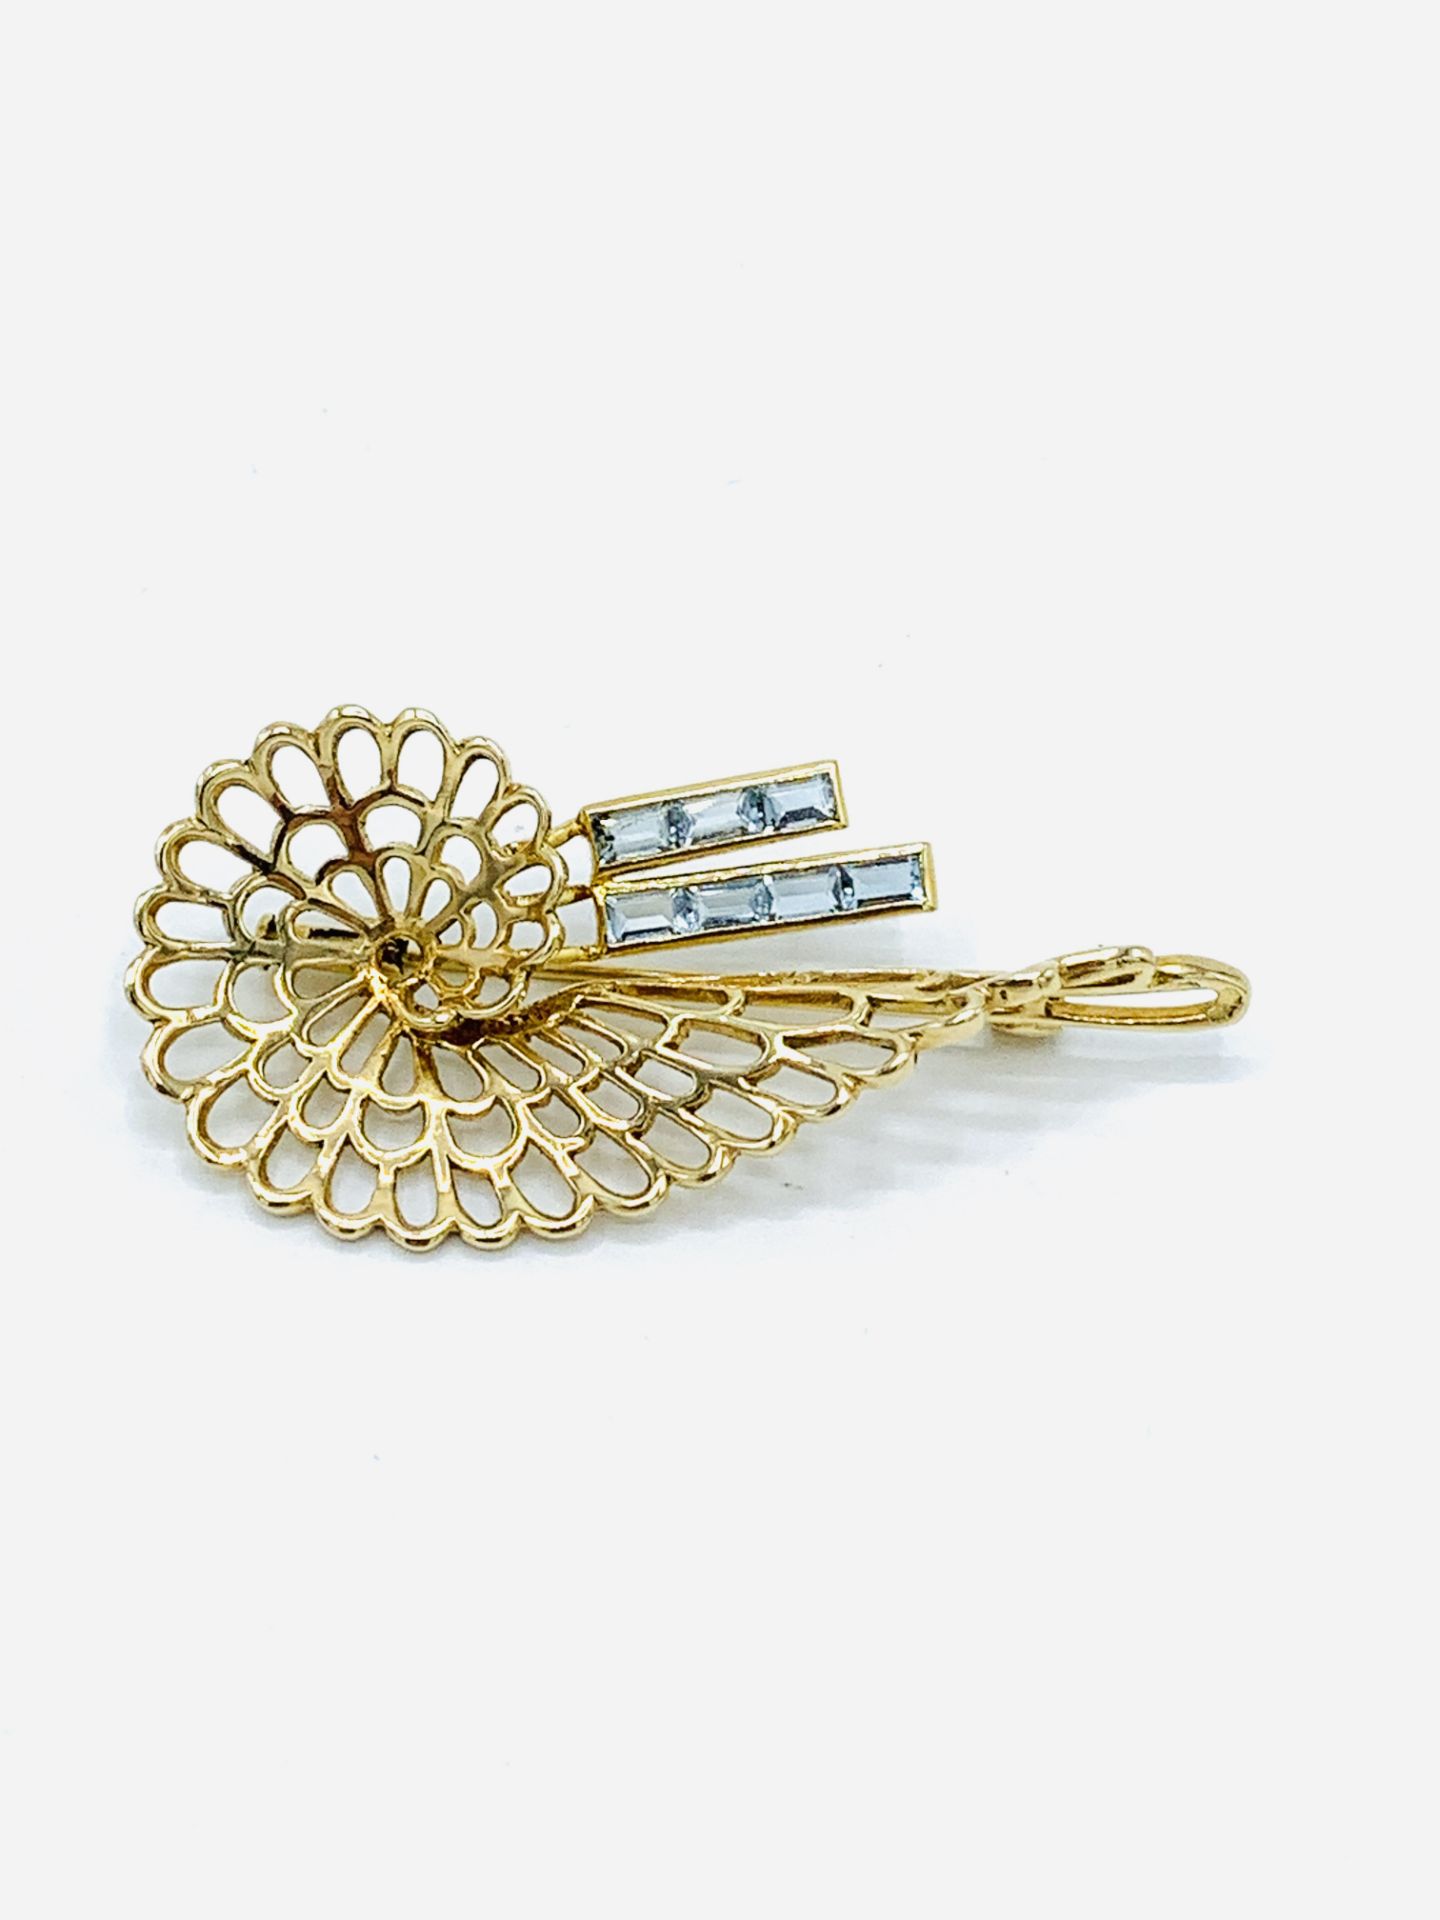 585 gold filigree brooch set with 7 aquamarines. - Image 2 of 6